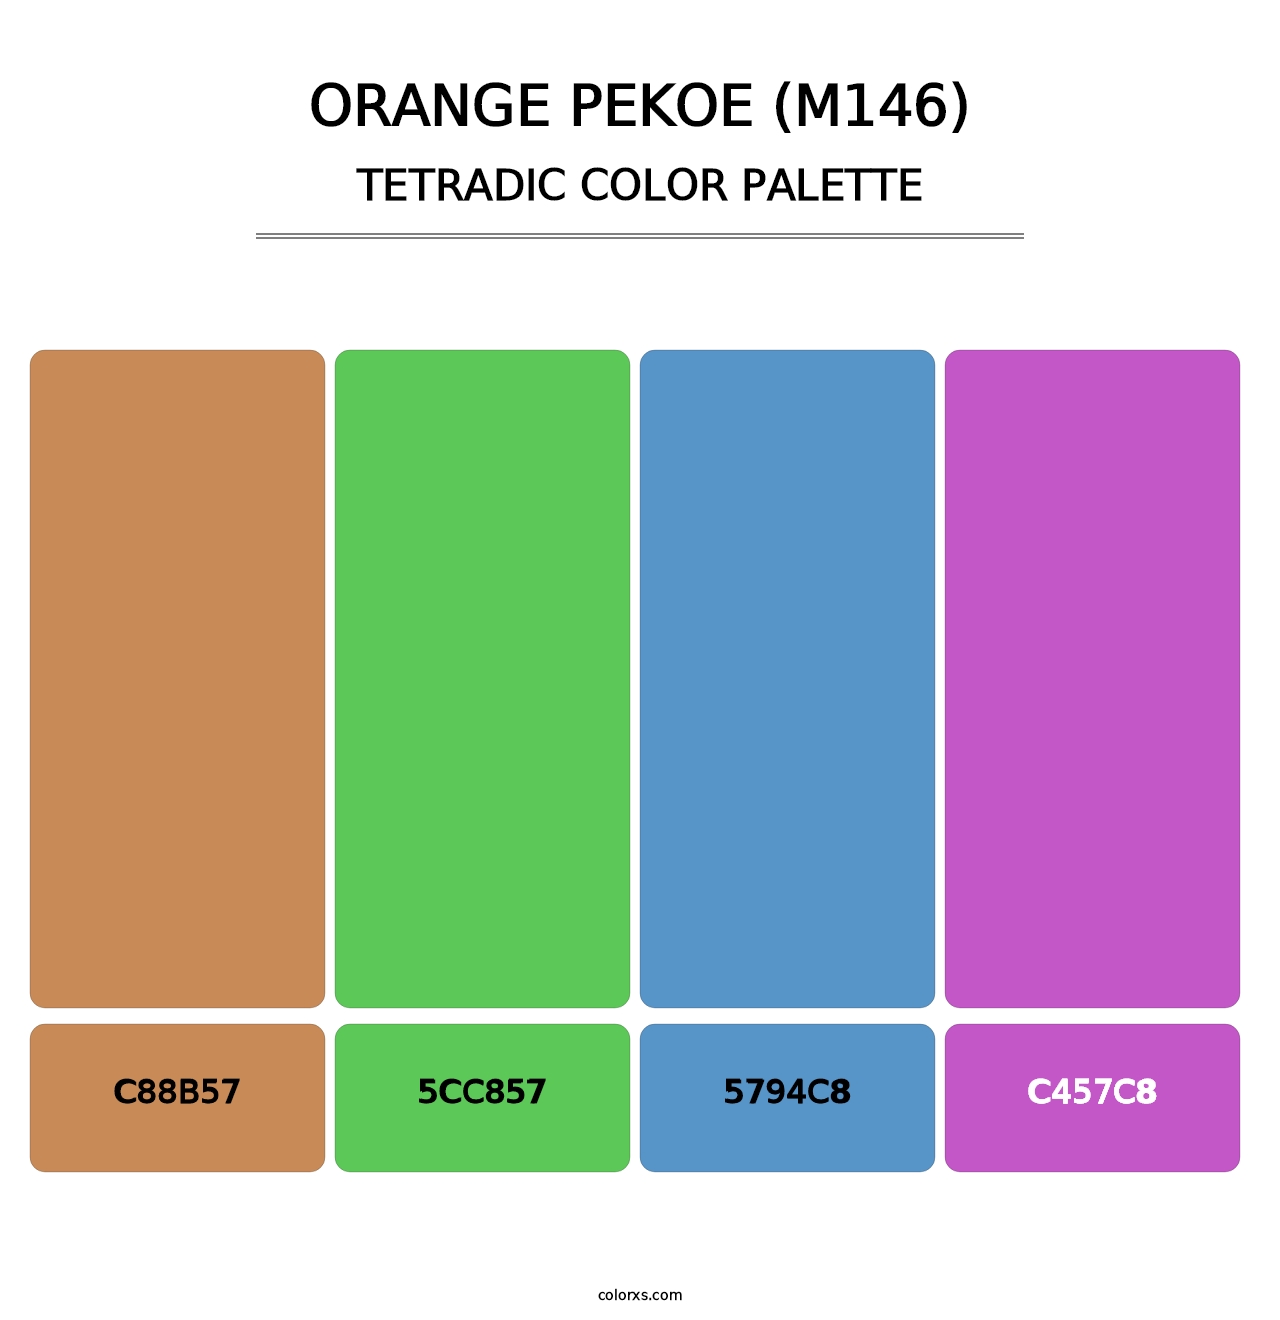 Orange Pekoe (M146) - Tetradic Color Palette